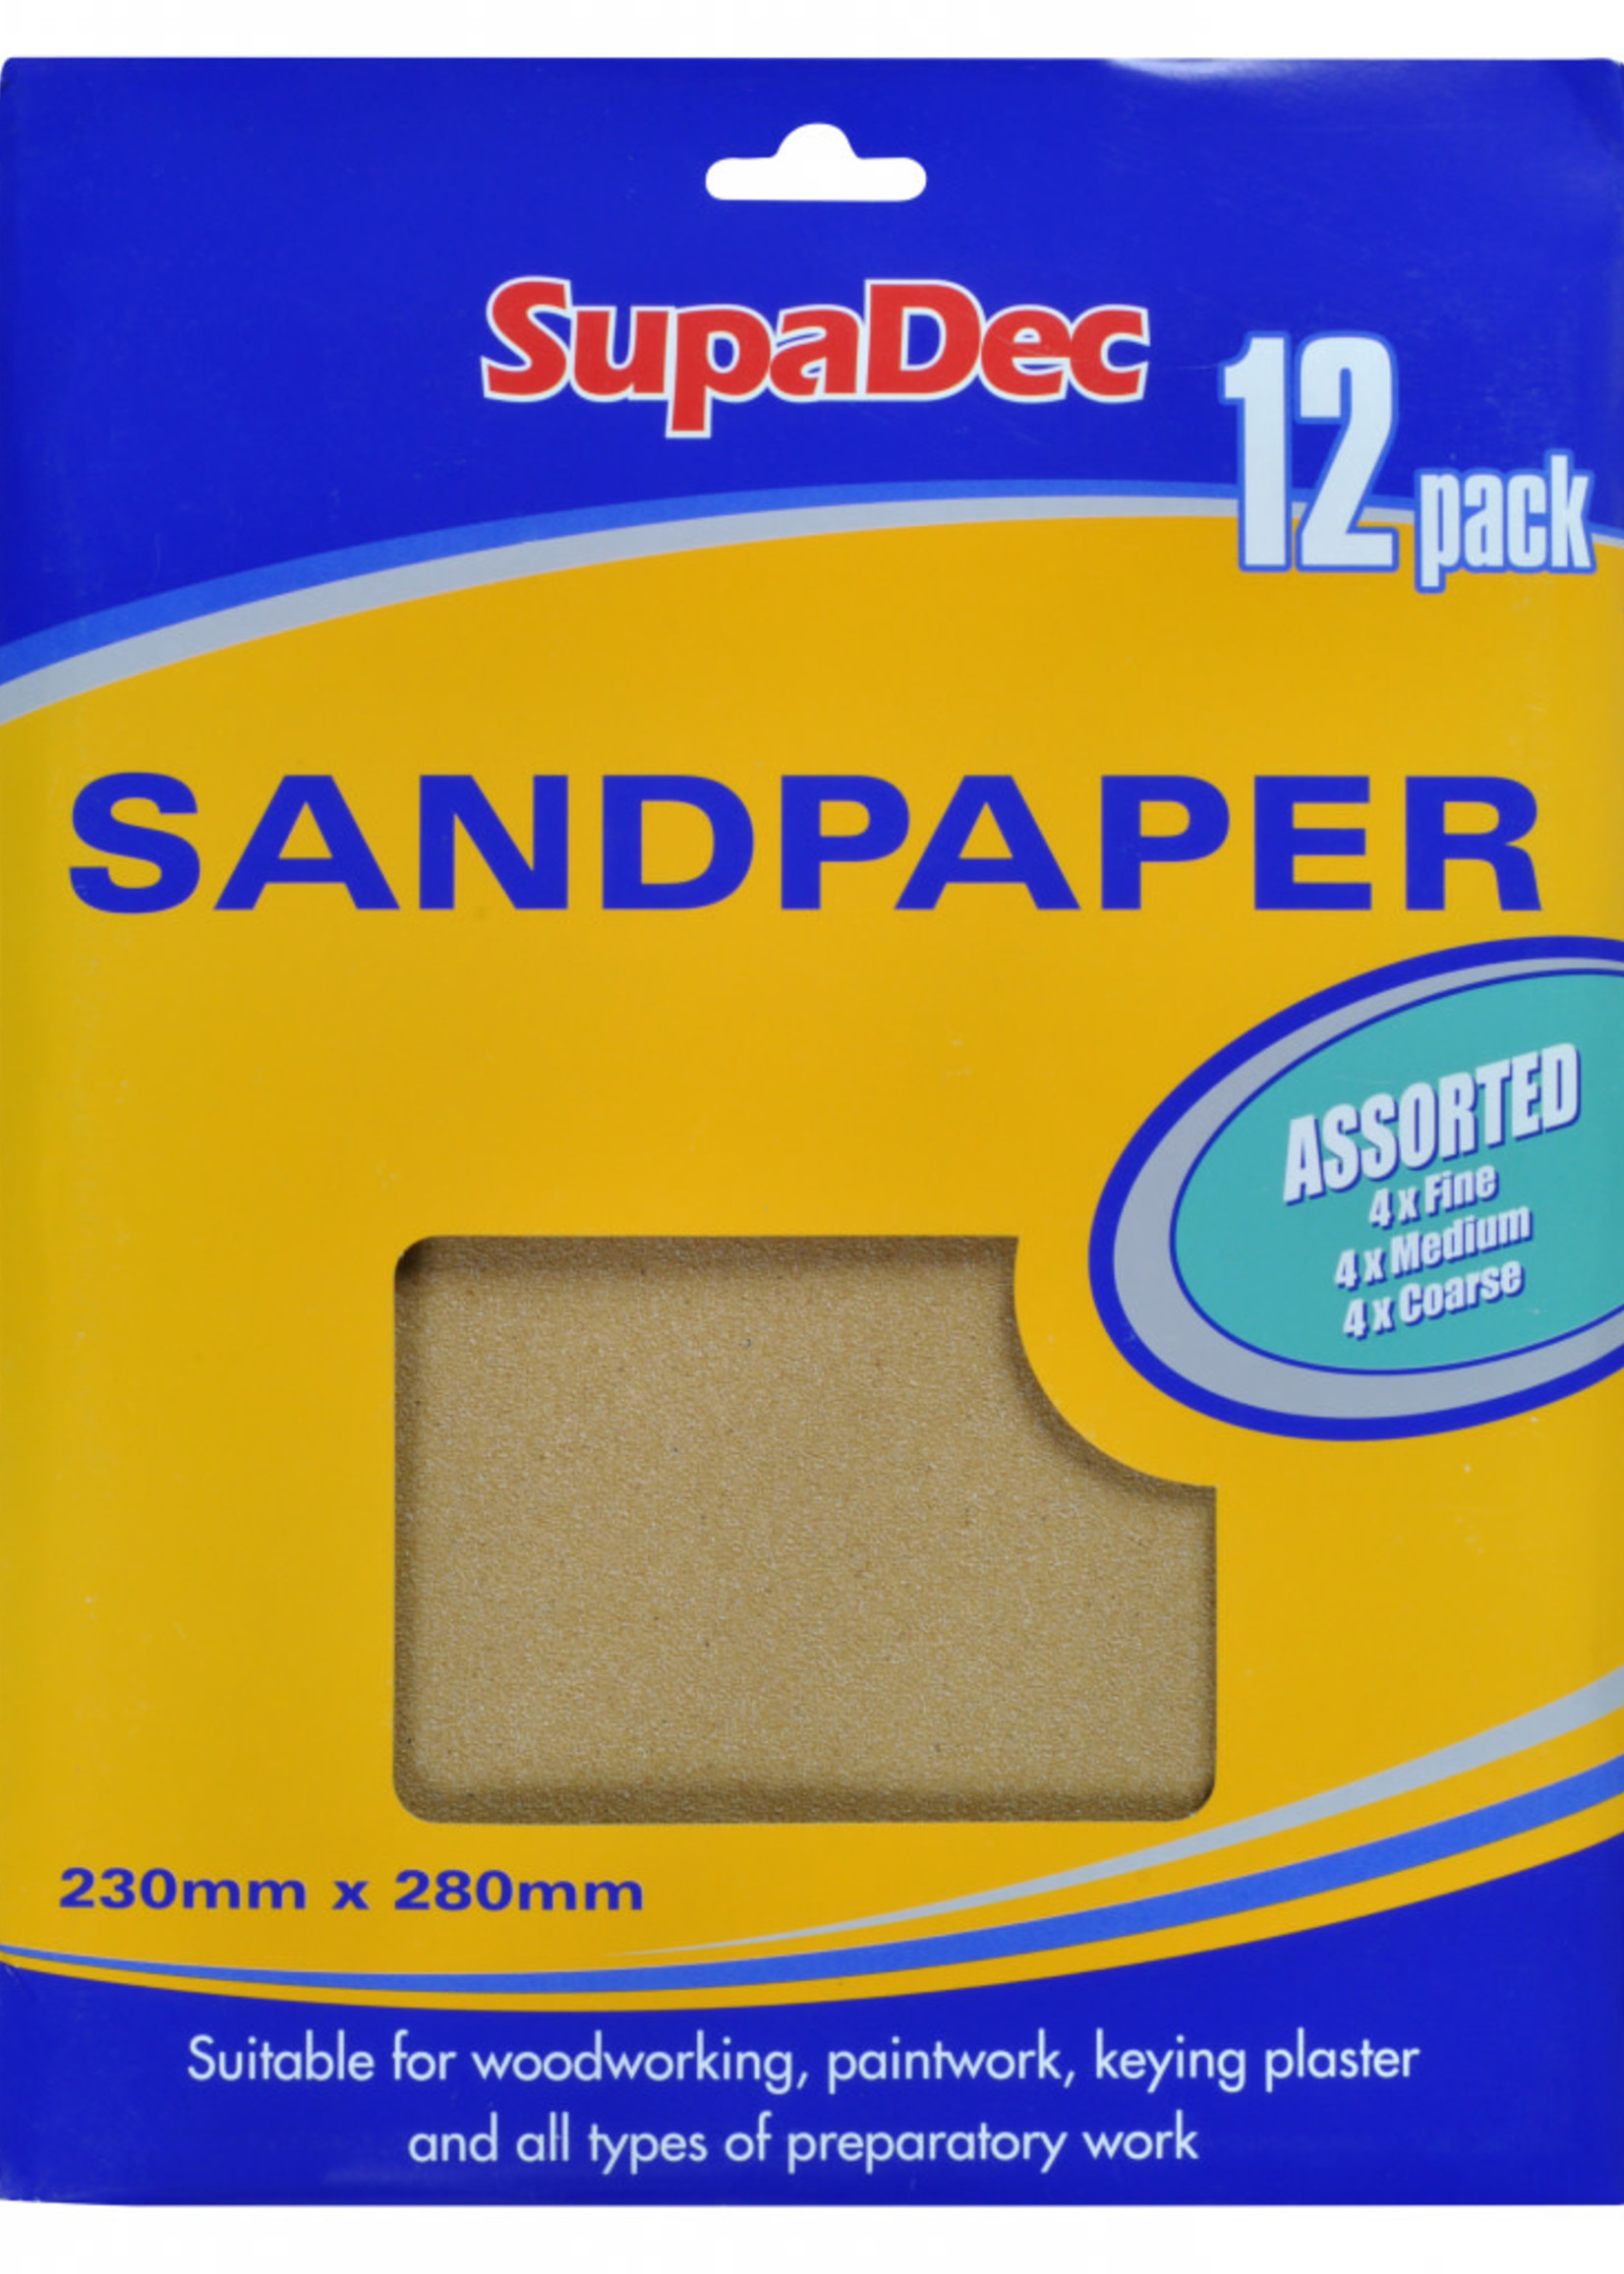 SupaDec SupaDec Sandpaper Assorted 12 Pack